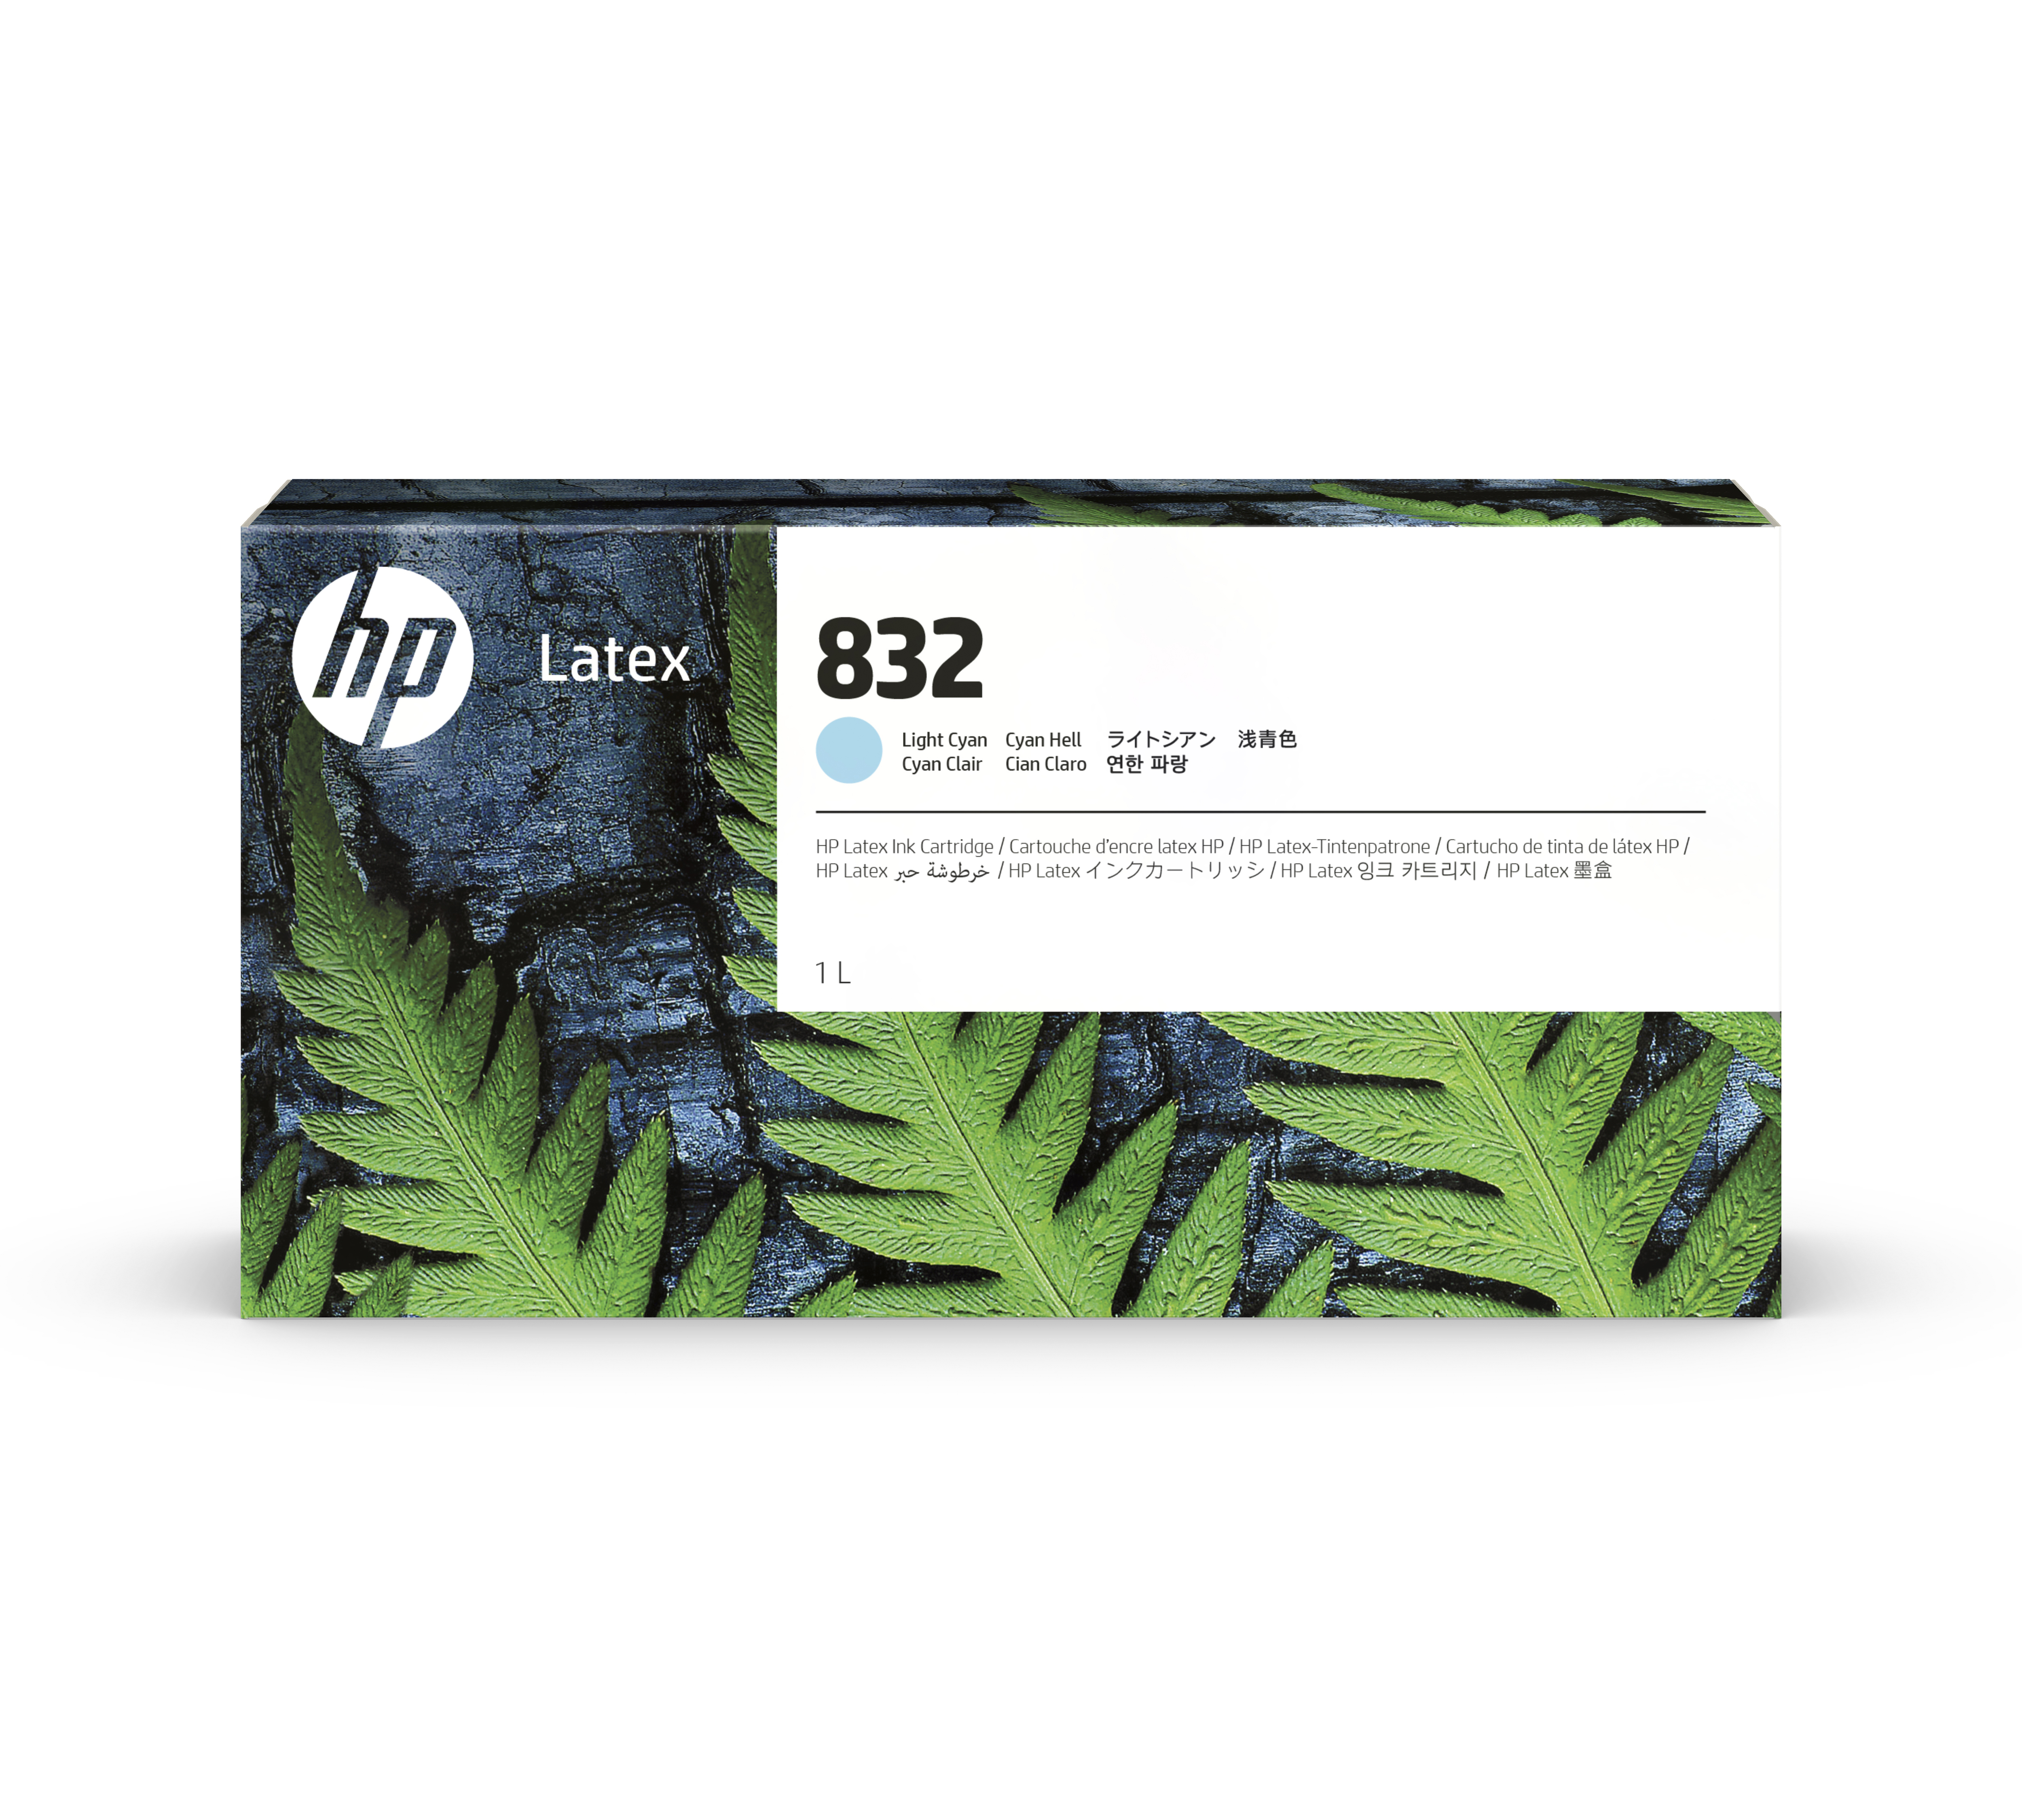 HP 832 Latex Tinte hell cyan - 1 Liter